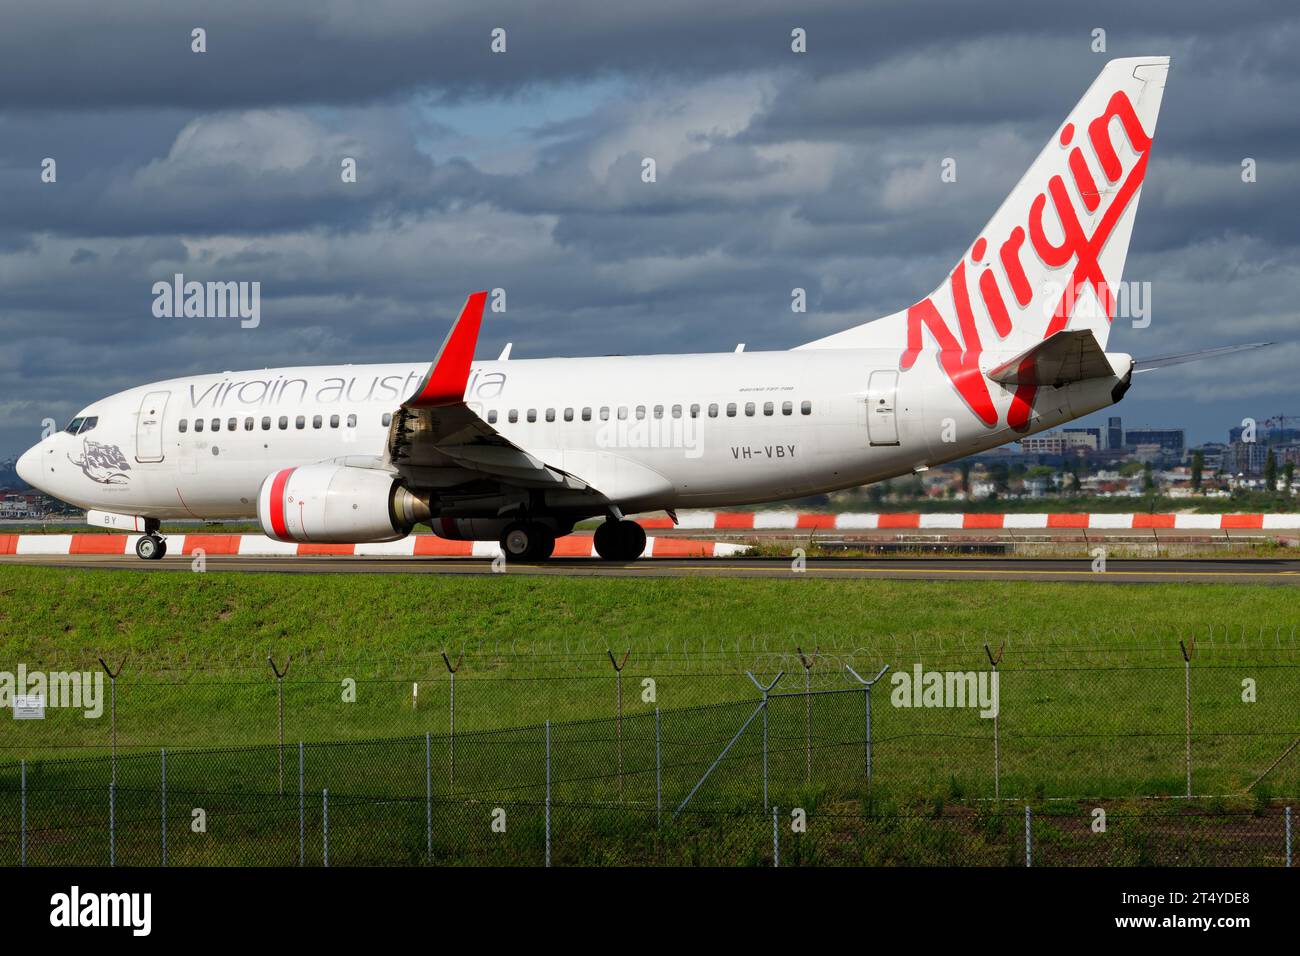 Virgin Australia Boeing 737-700 seen taxiing at Sydney Airport Stock Photo